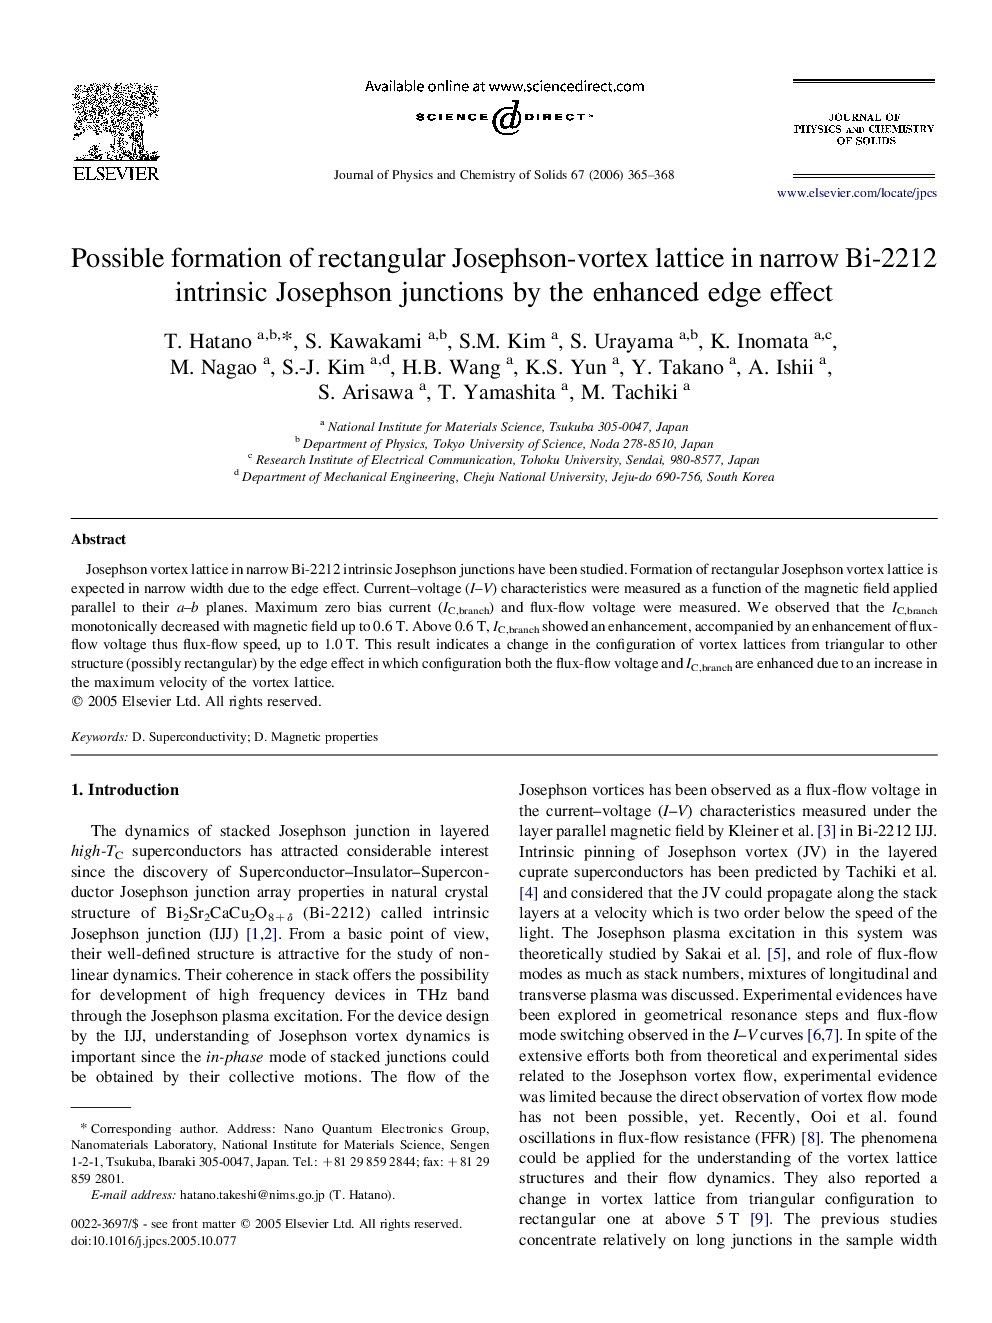 Possible formation of rectangular Josephson-vortex lattice in narrow Bi-2212 intrinsic Josephson junctions by the enhanced edge effect